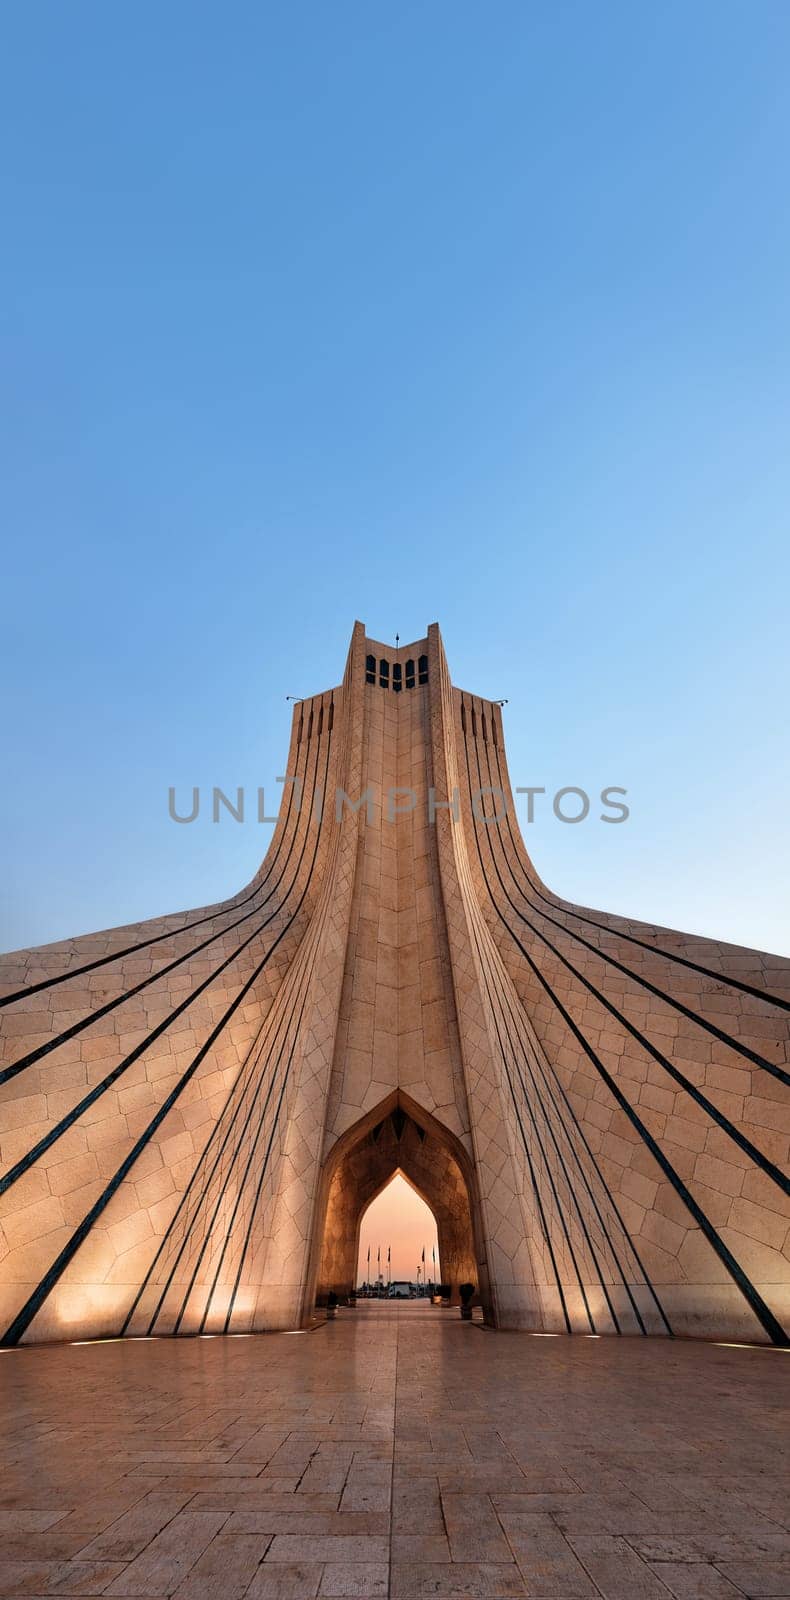 The Azadi Tower is a symbol of freedom in Iran, the main symbol of Iran's capital. MS ZI LA Azadi Tower - Freedom Tower, the gateway to Tehran, Popular tourist point at twilight. Tehran, Iran by EvgeniyQW